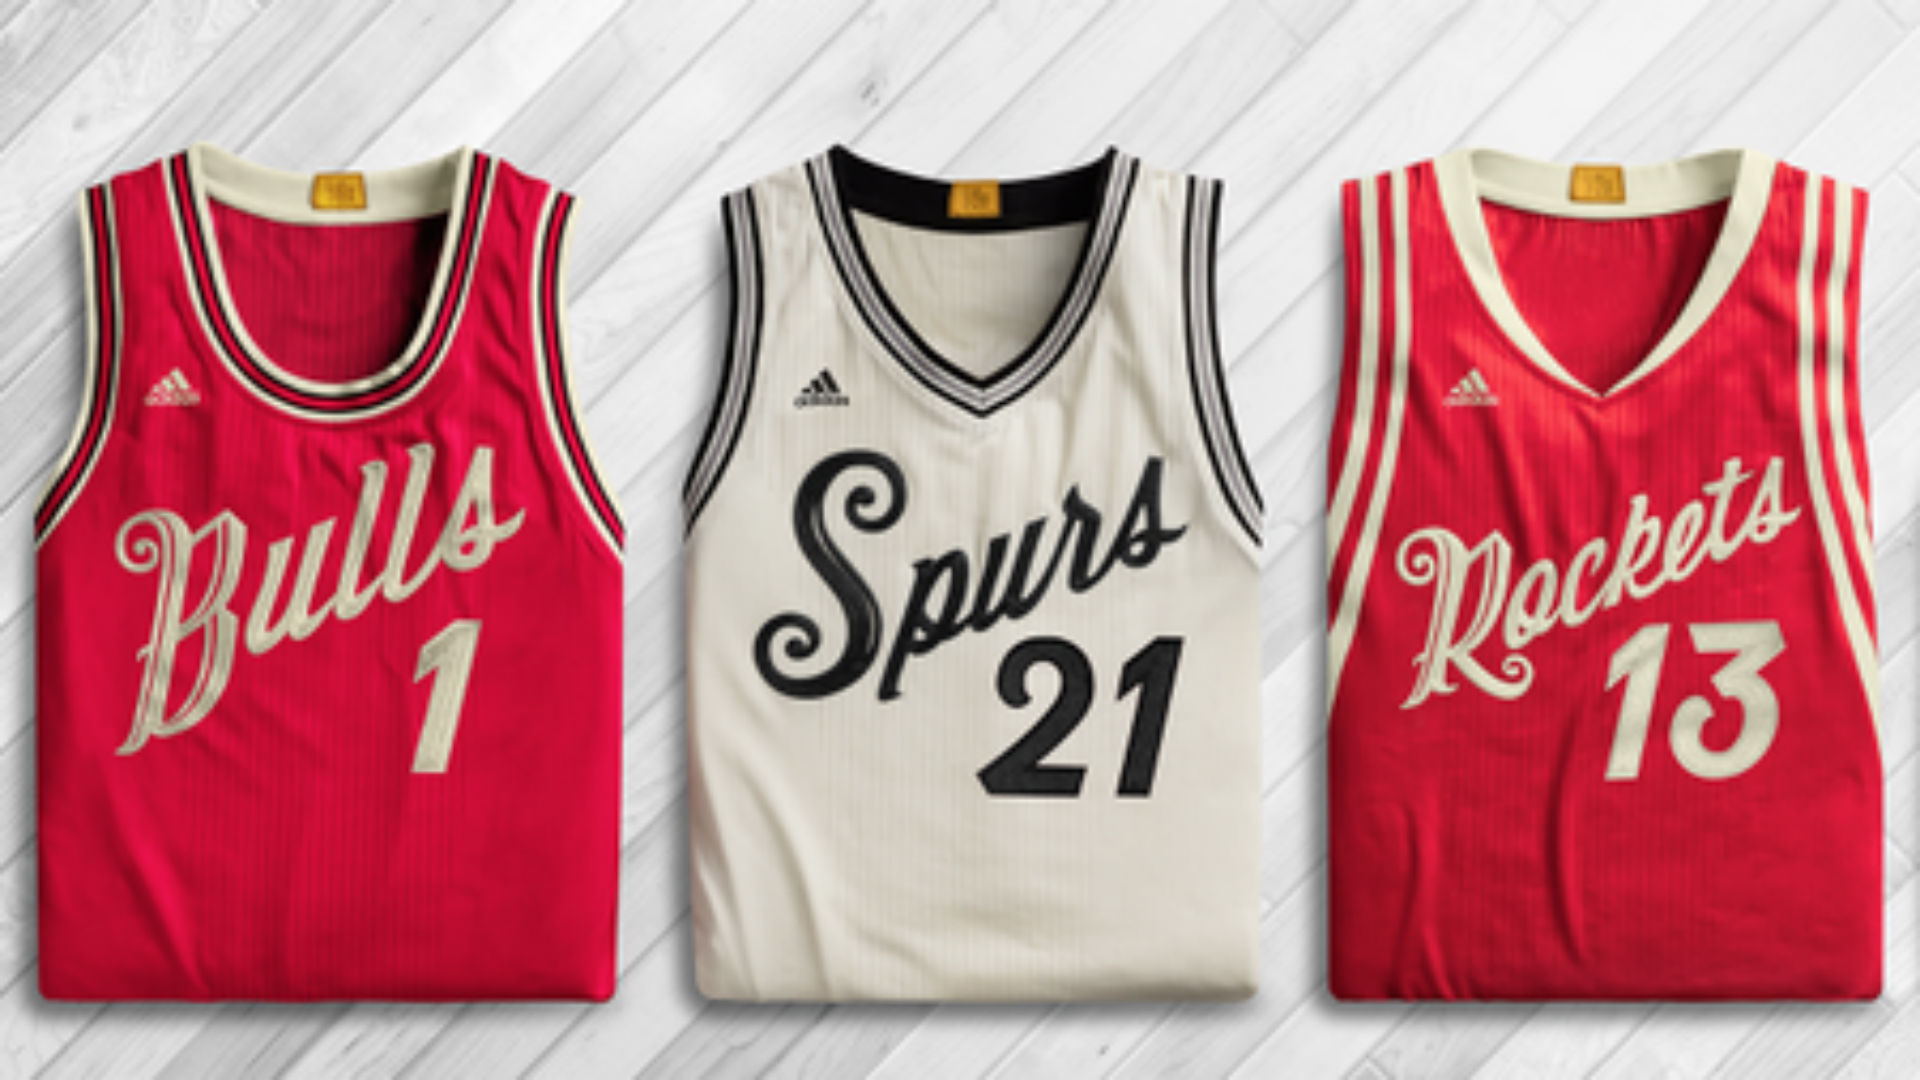 Hey, the NBA Christmas jerseys for 2015 